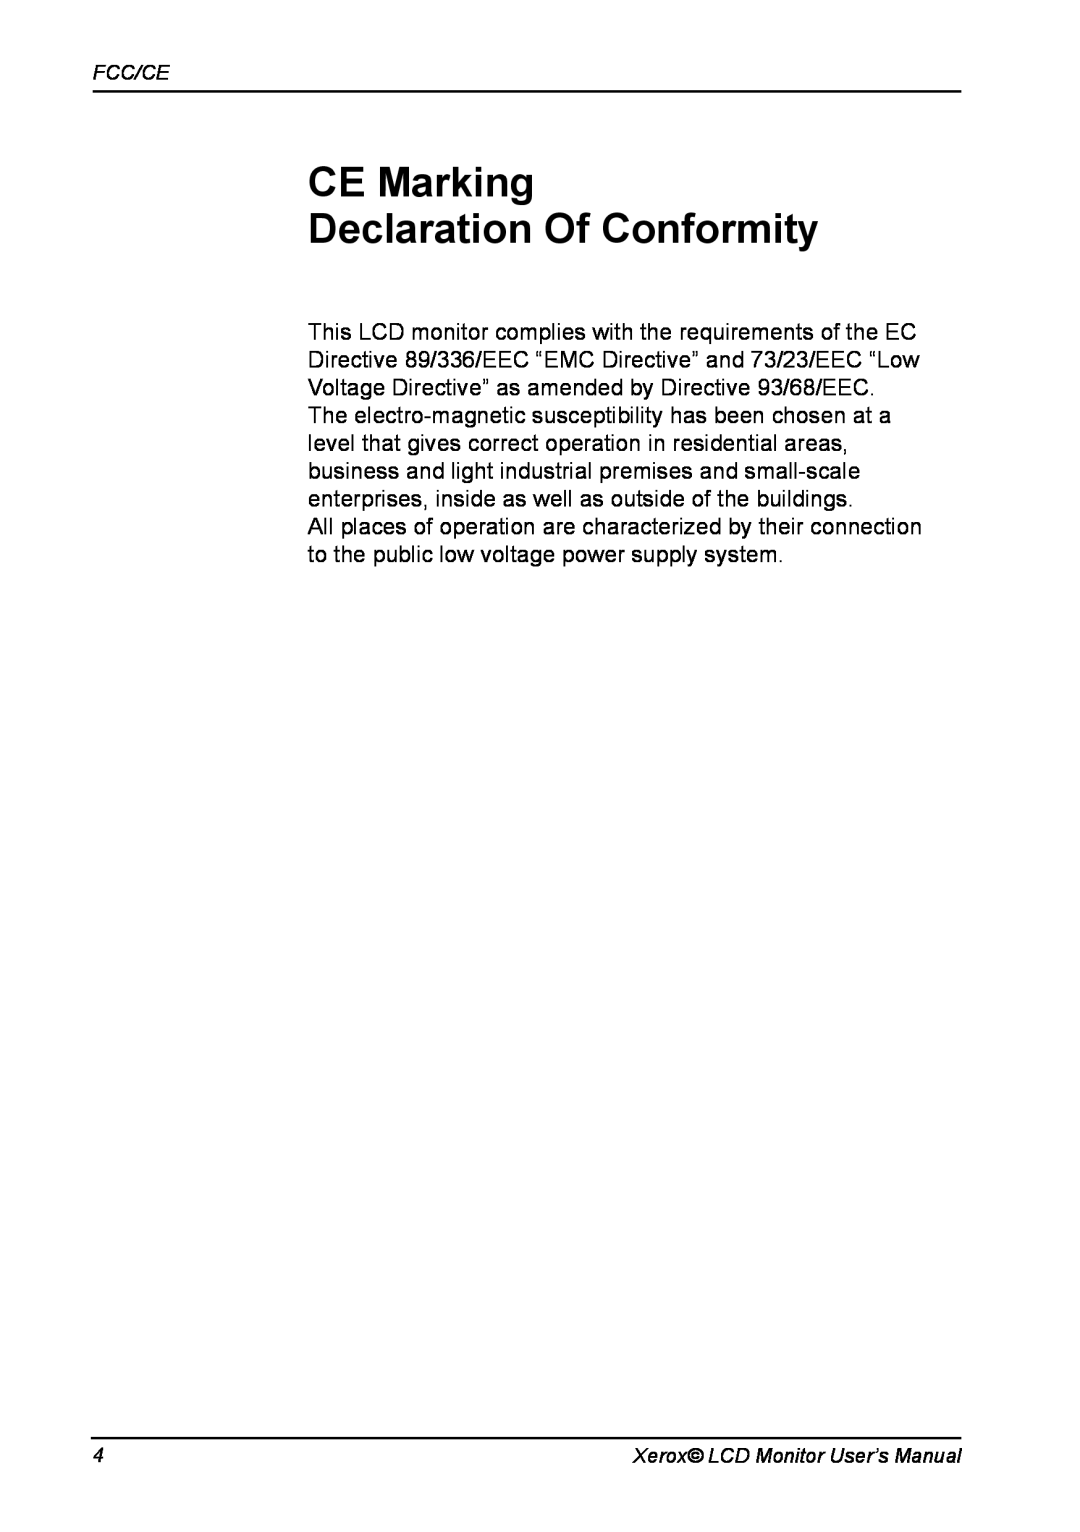 Xerox XM3-19w manual CE Marking Declaration Of Conformity, Fcc/Ce 